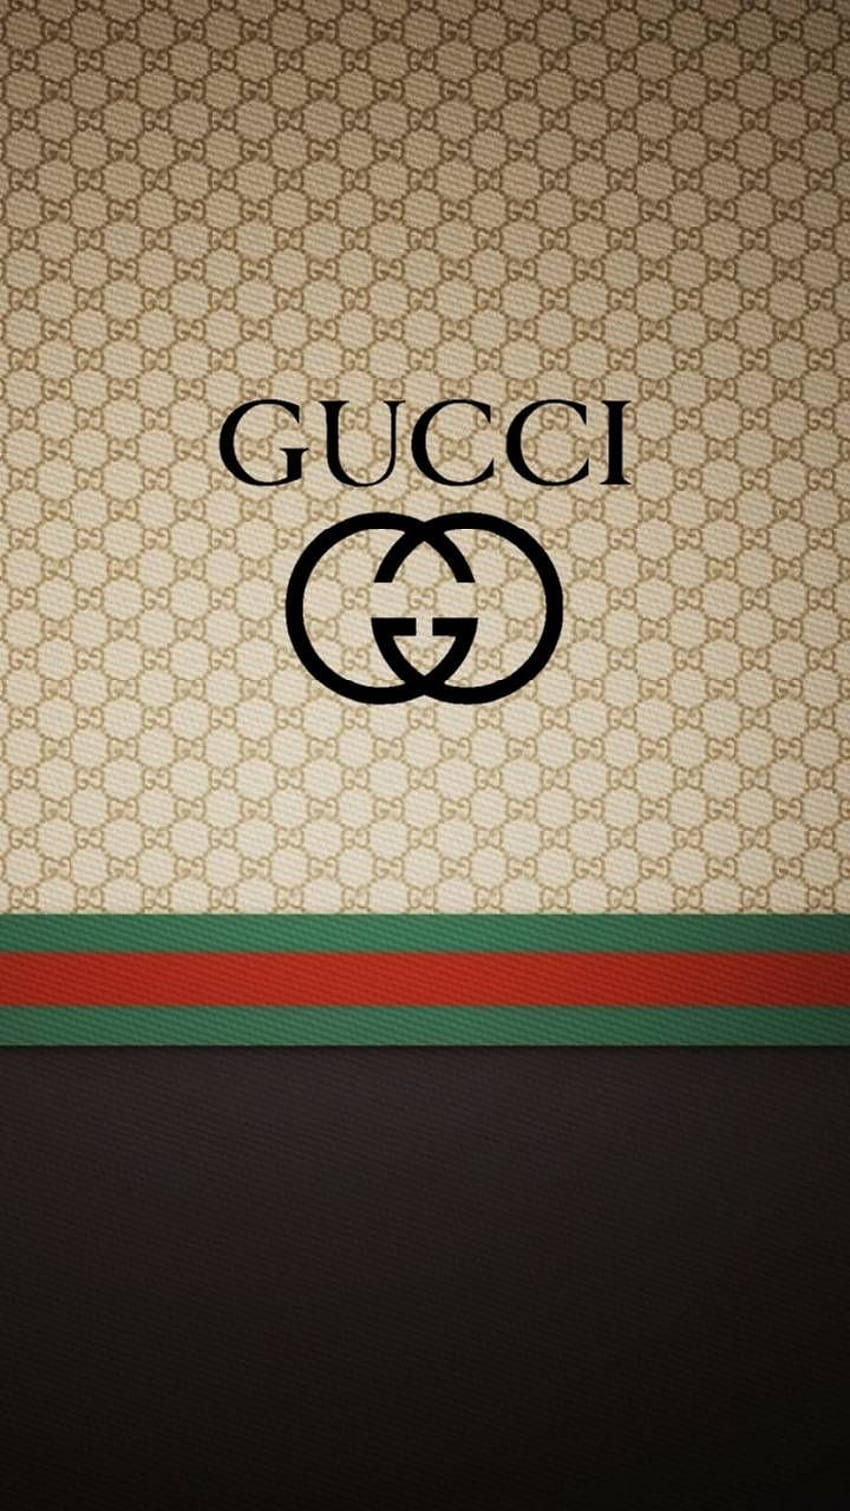 Luis Vuitton x Gucci wallpaper